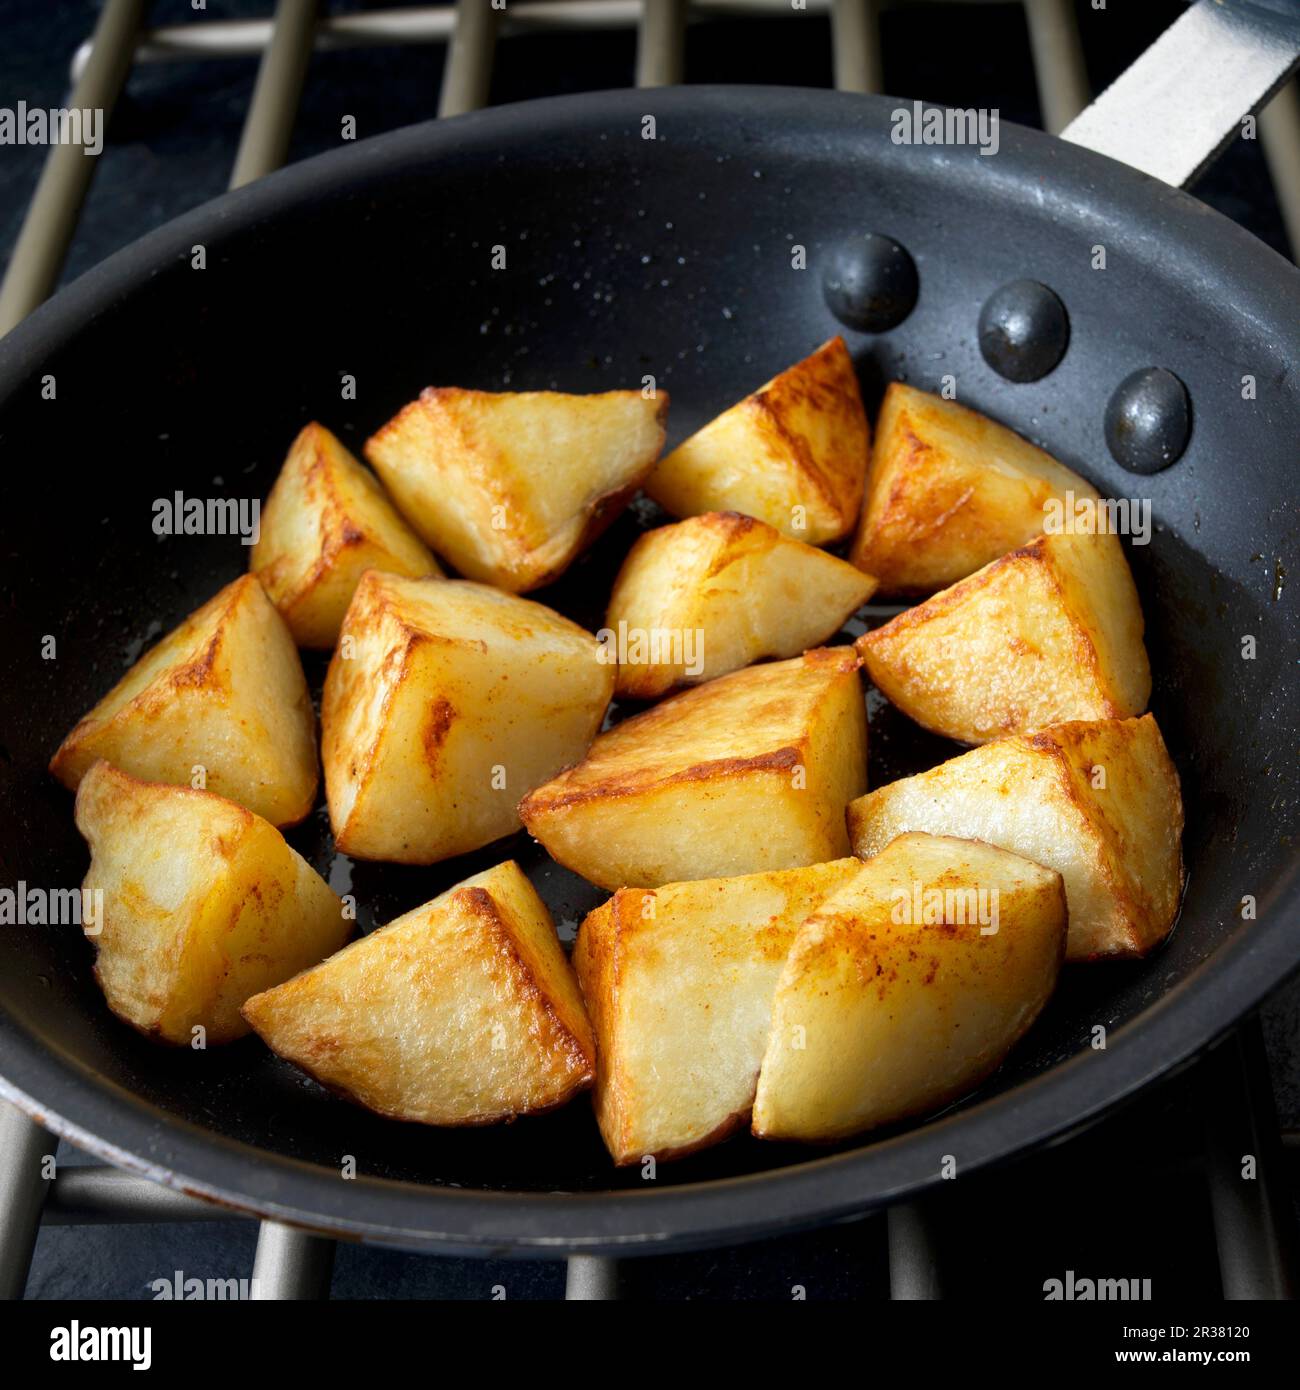 https://c8.alamy.com/comp/2R38120/fried-potatoes-in-frying-pan-2R38120.jpg